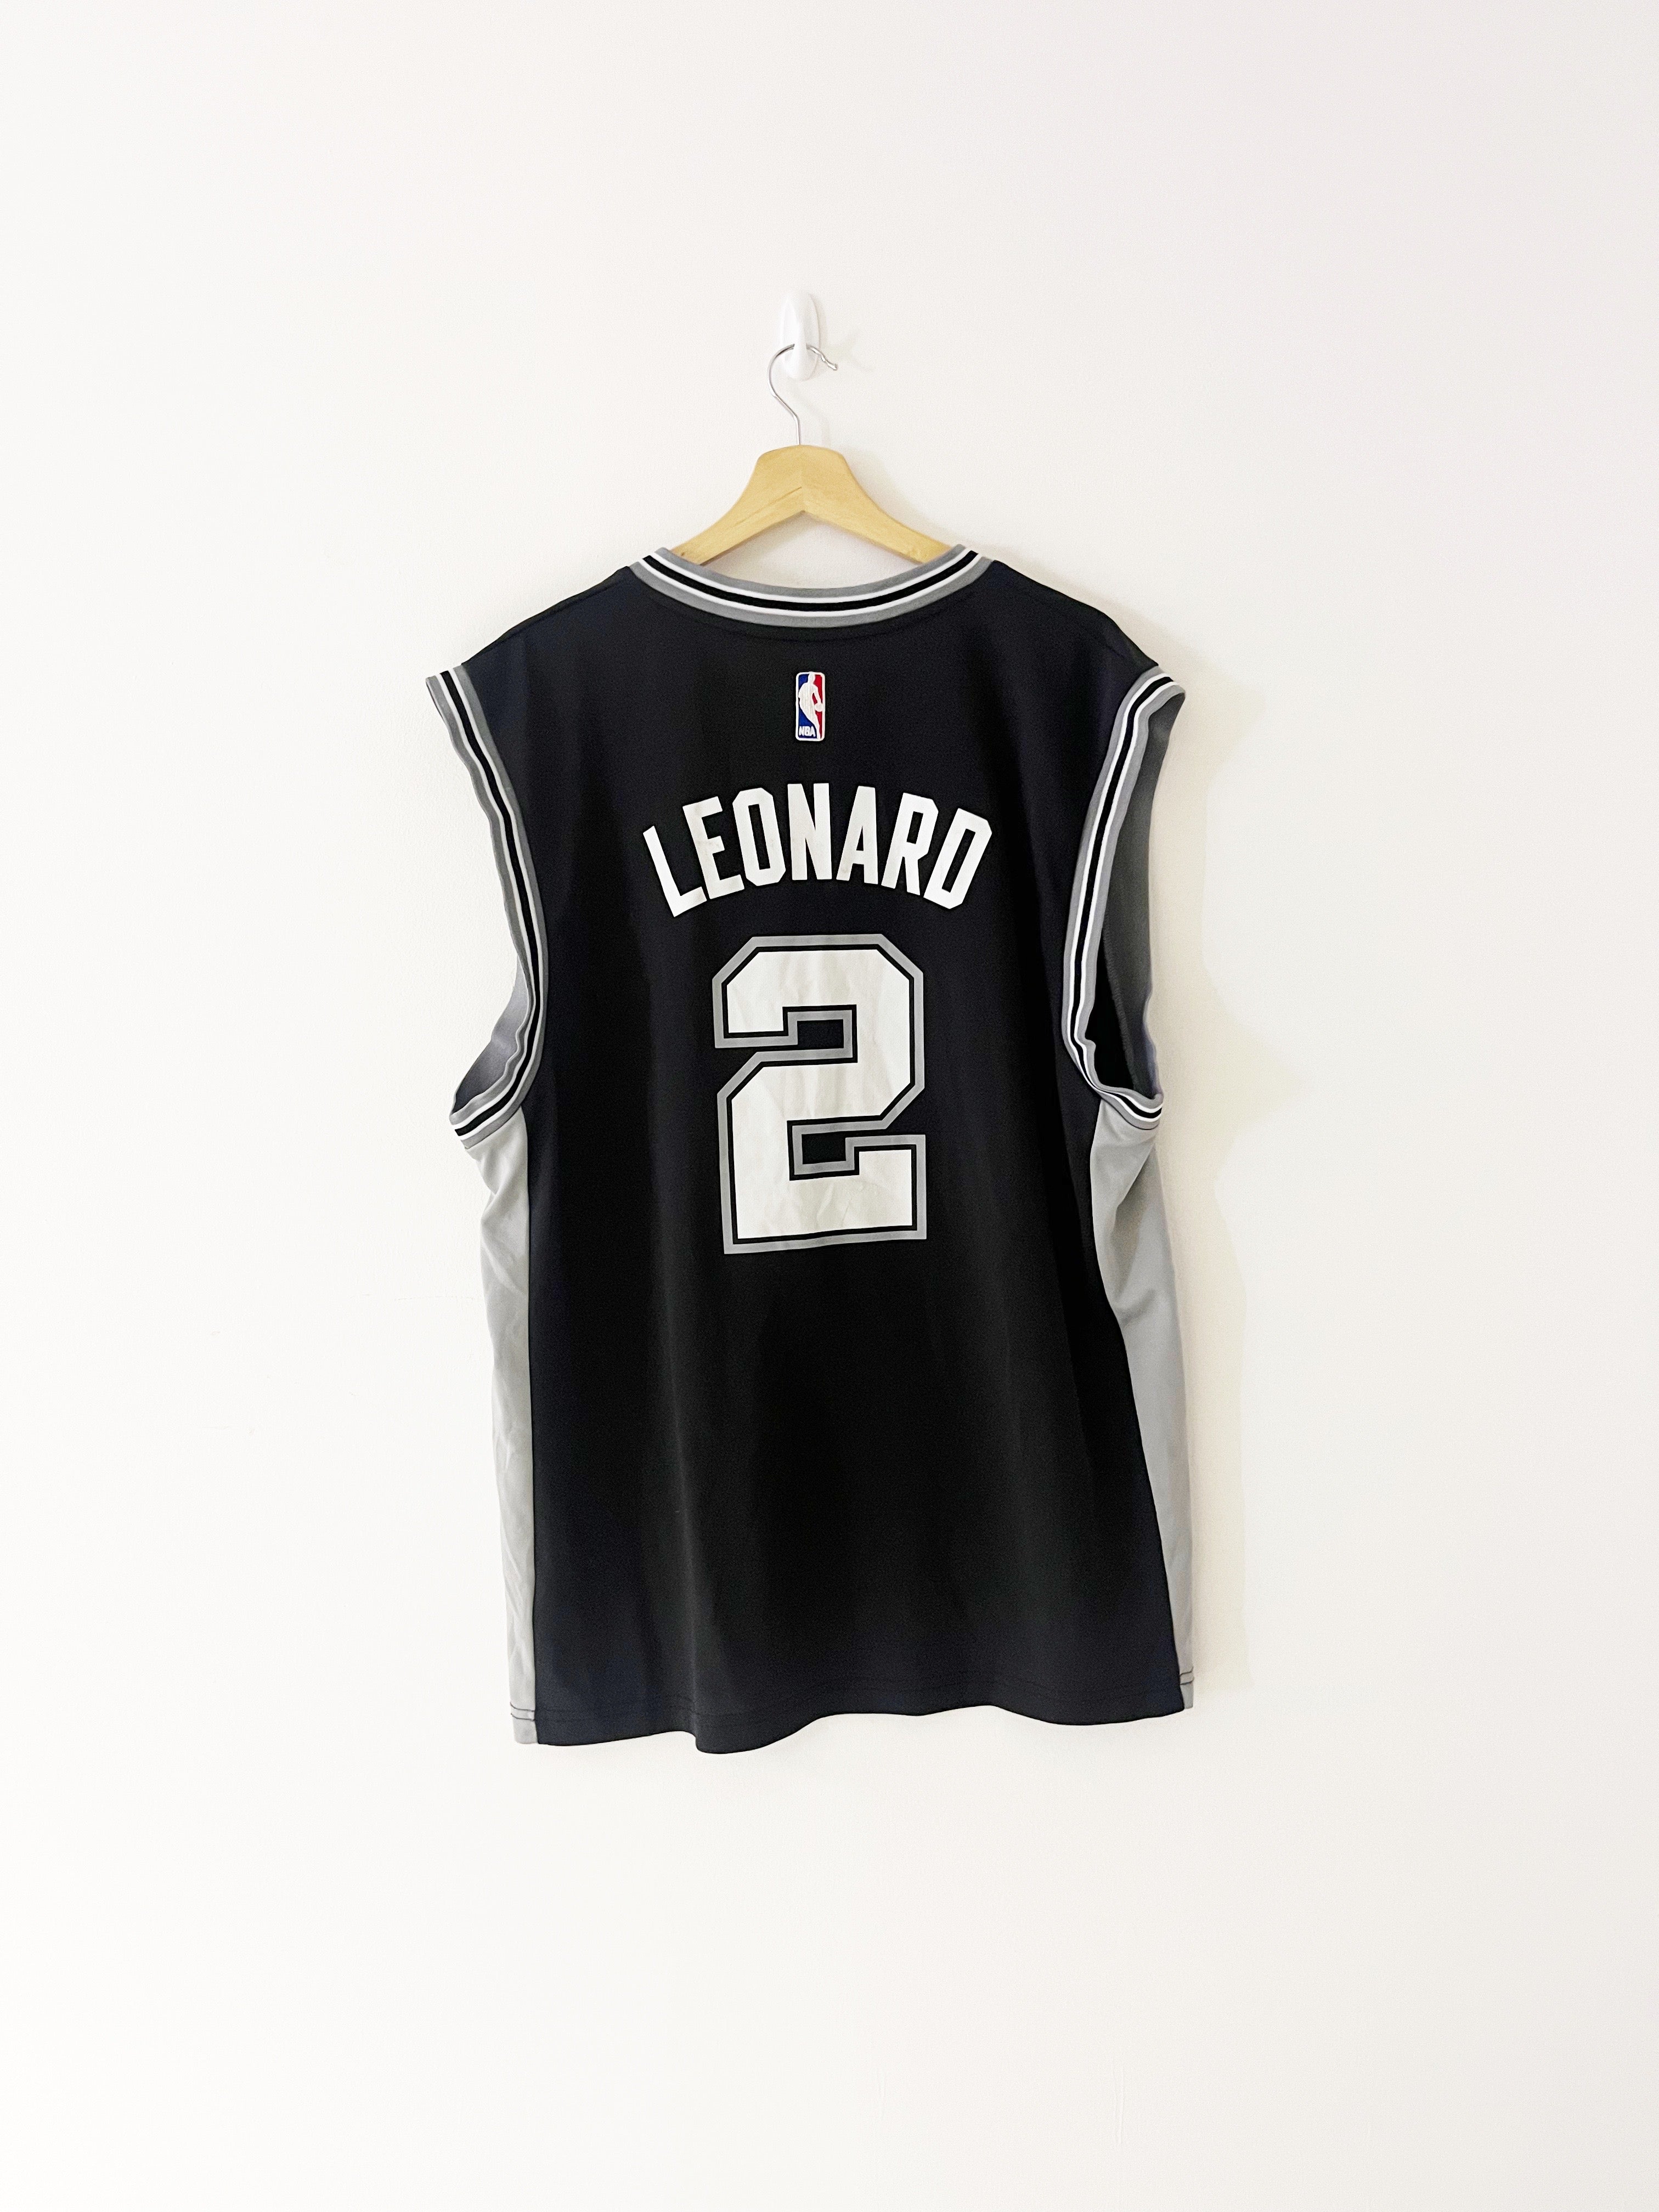 2010/14 San Antonio Spurs Away Adidas Jersey Leonard #2 (L) 8.5/10